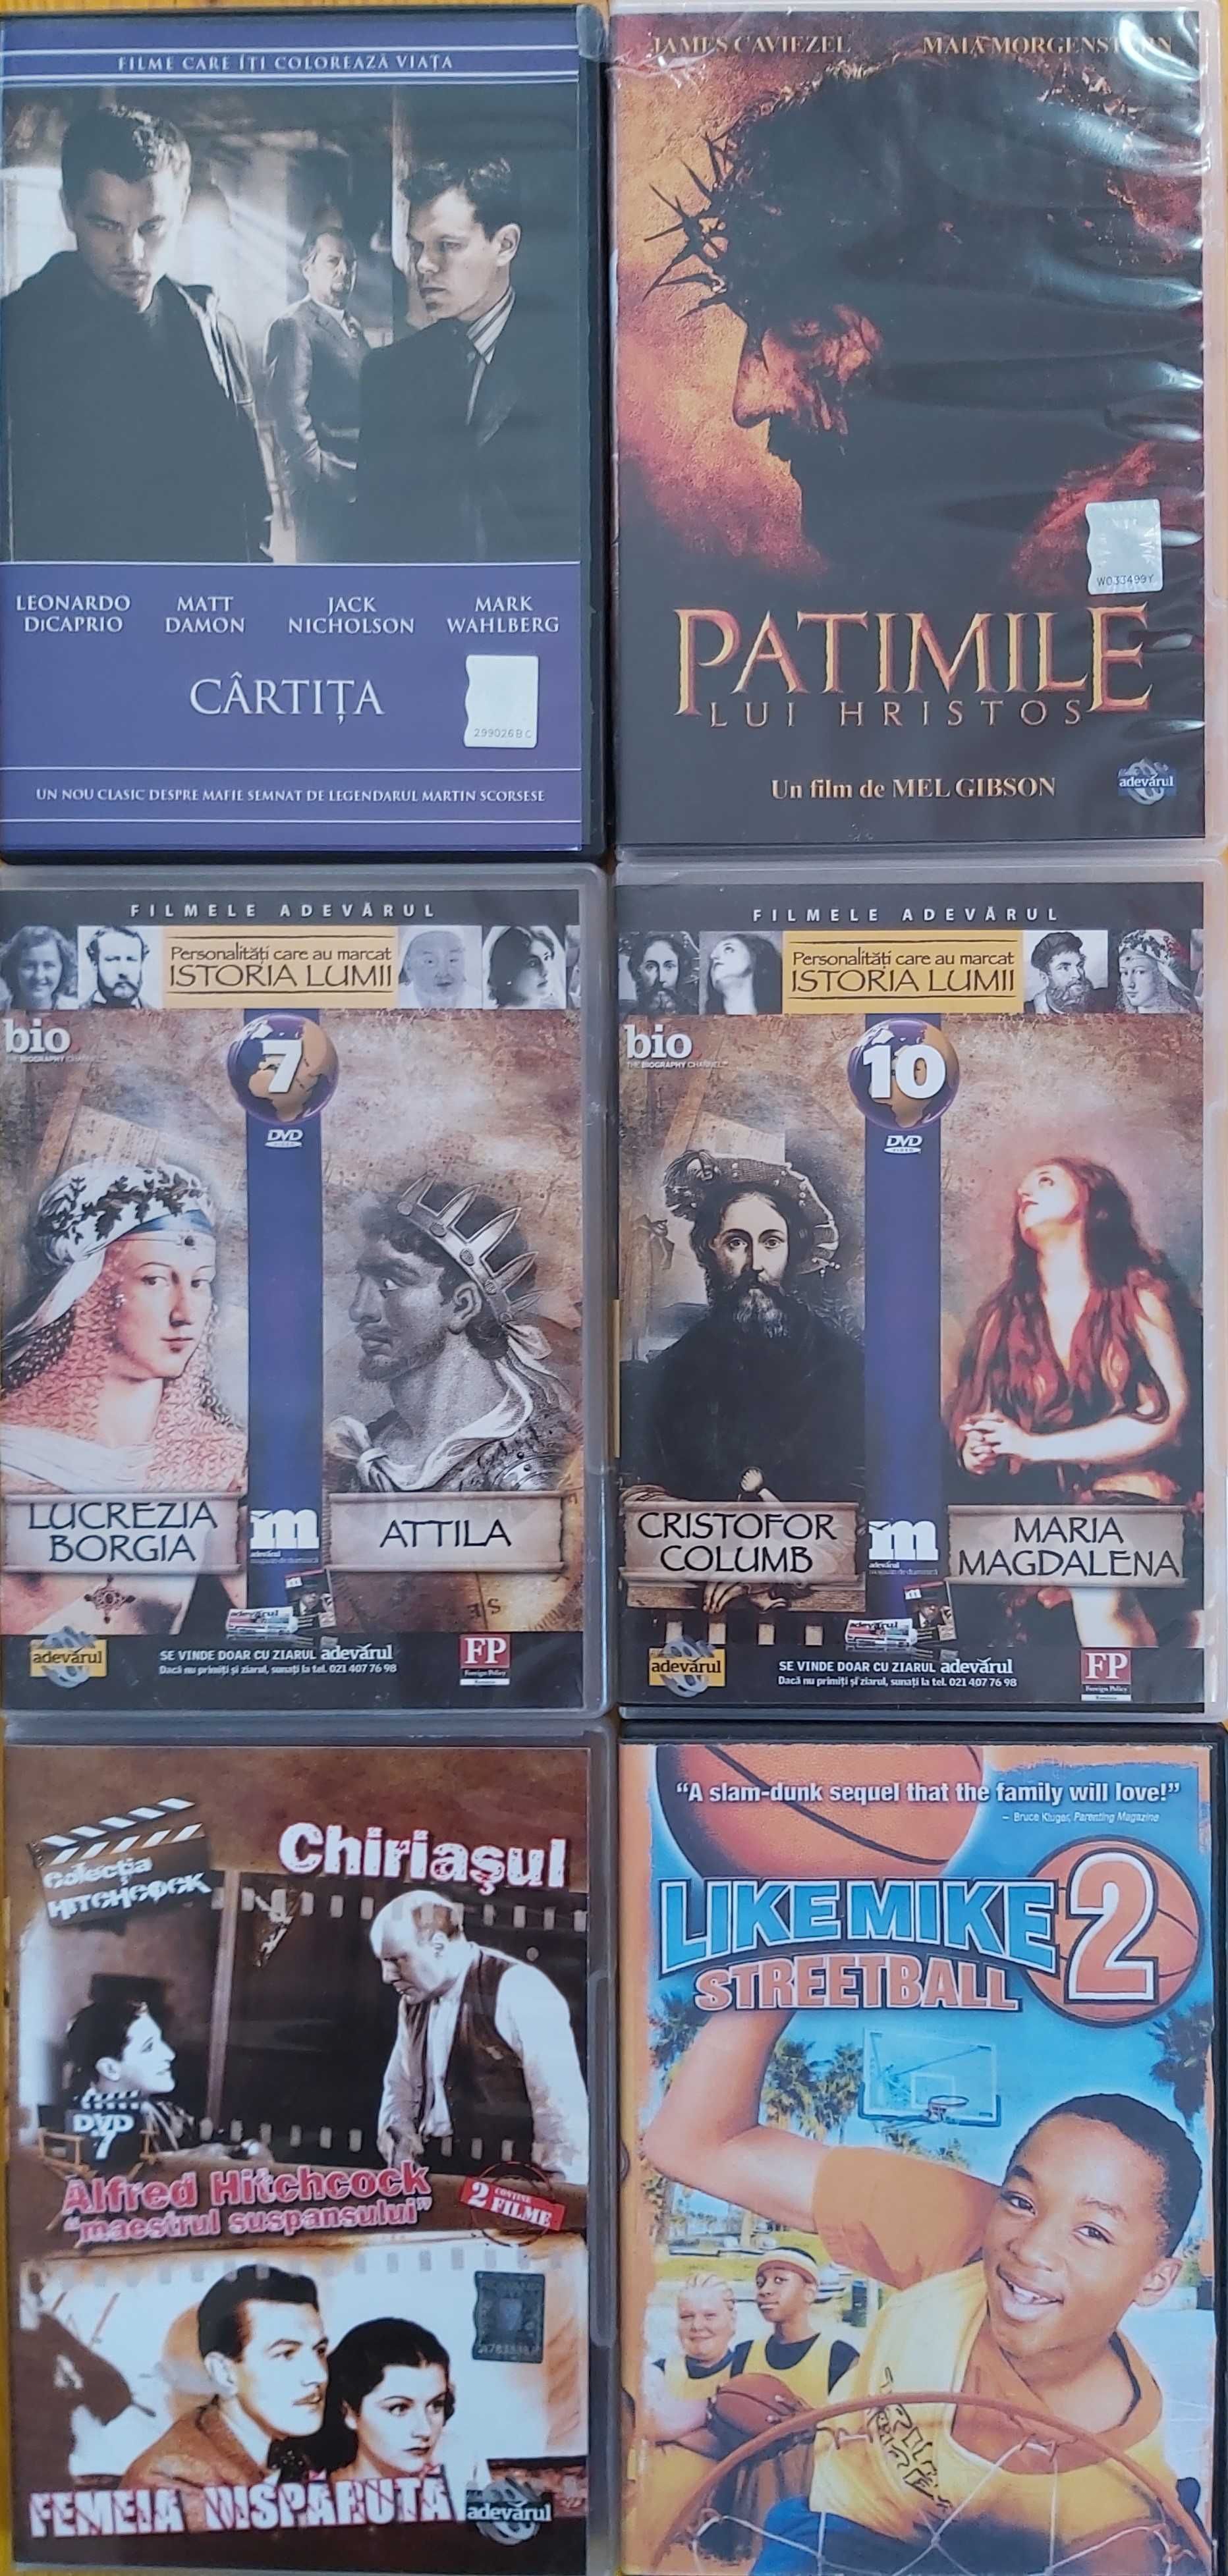 Carti + Documentare DVD + Filme DVD + Postere cu Filme si imagini(+18)